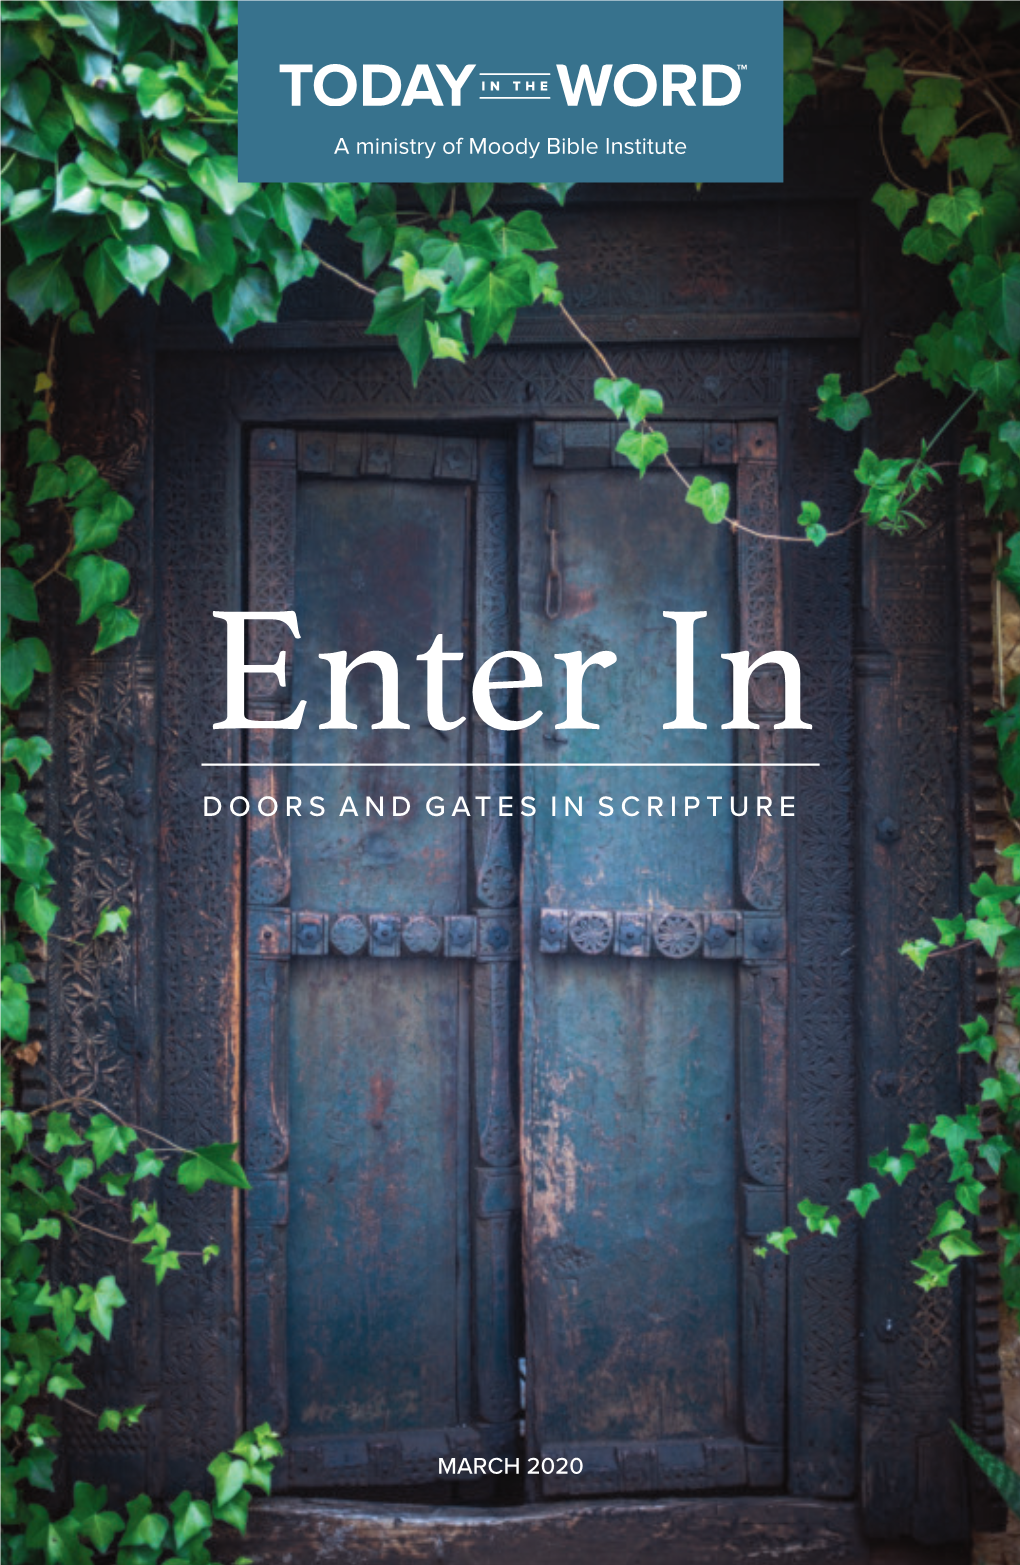 Doors and Gates in Scripture